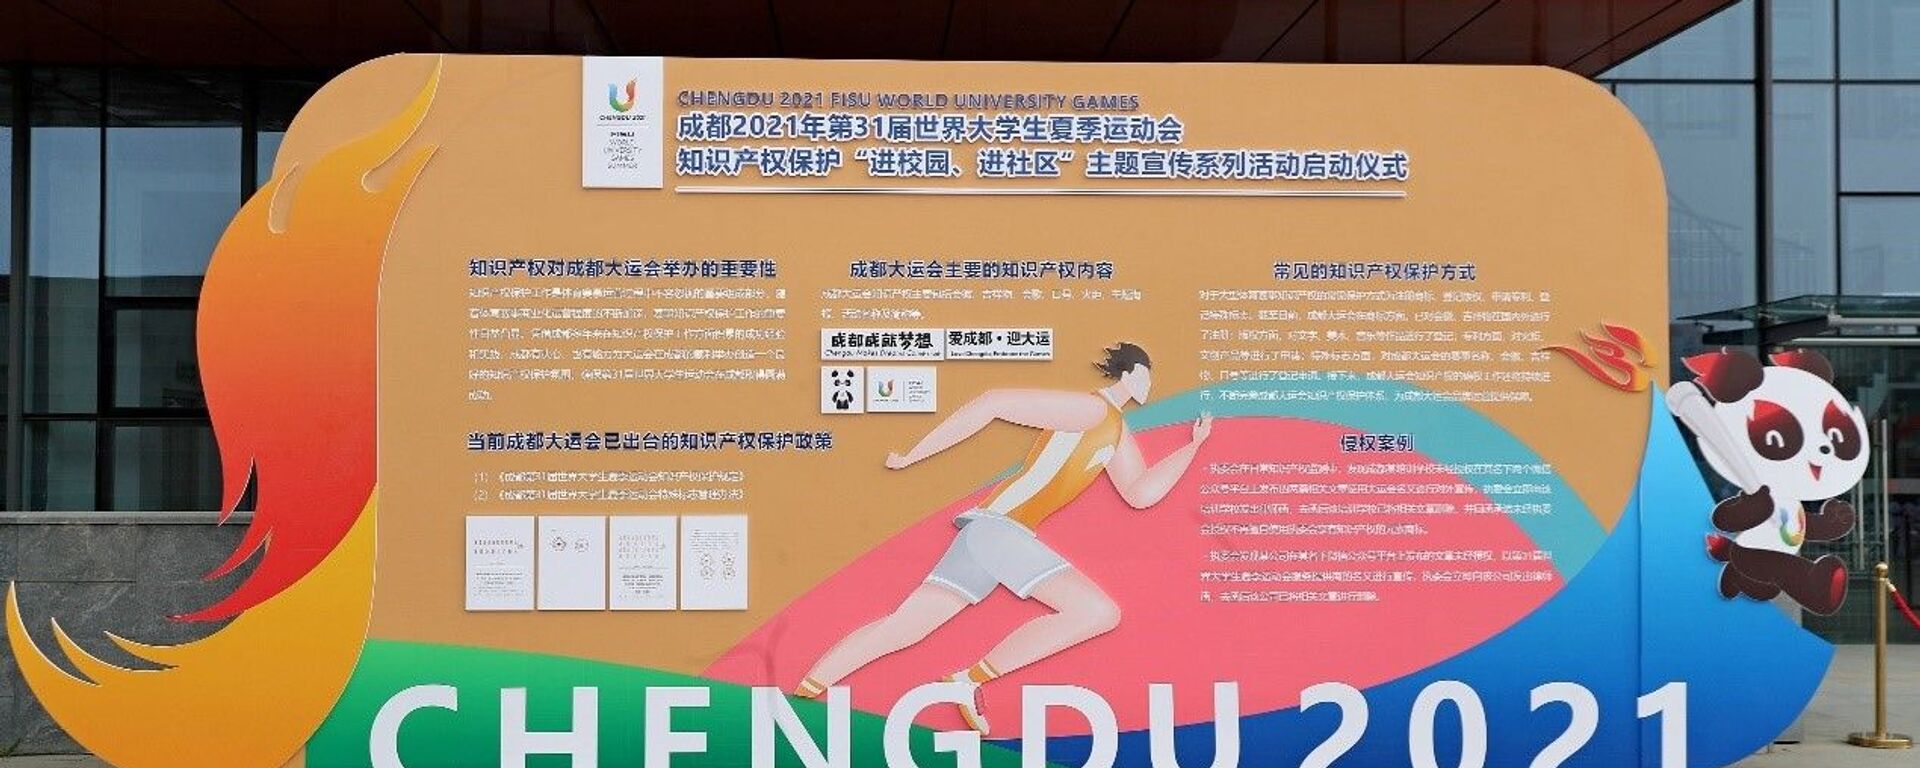 Chengdu 2021 31st Summer Universiade - 俄罗斯卫星通讯社, 1920, 02.04.2021